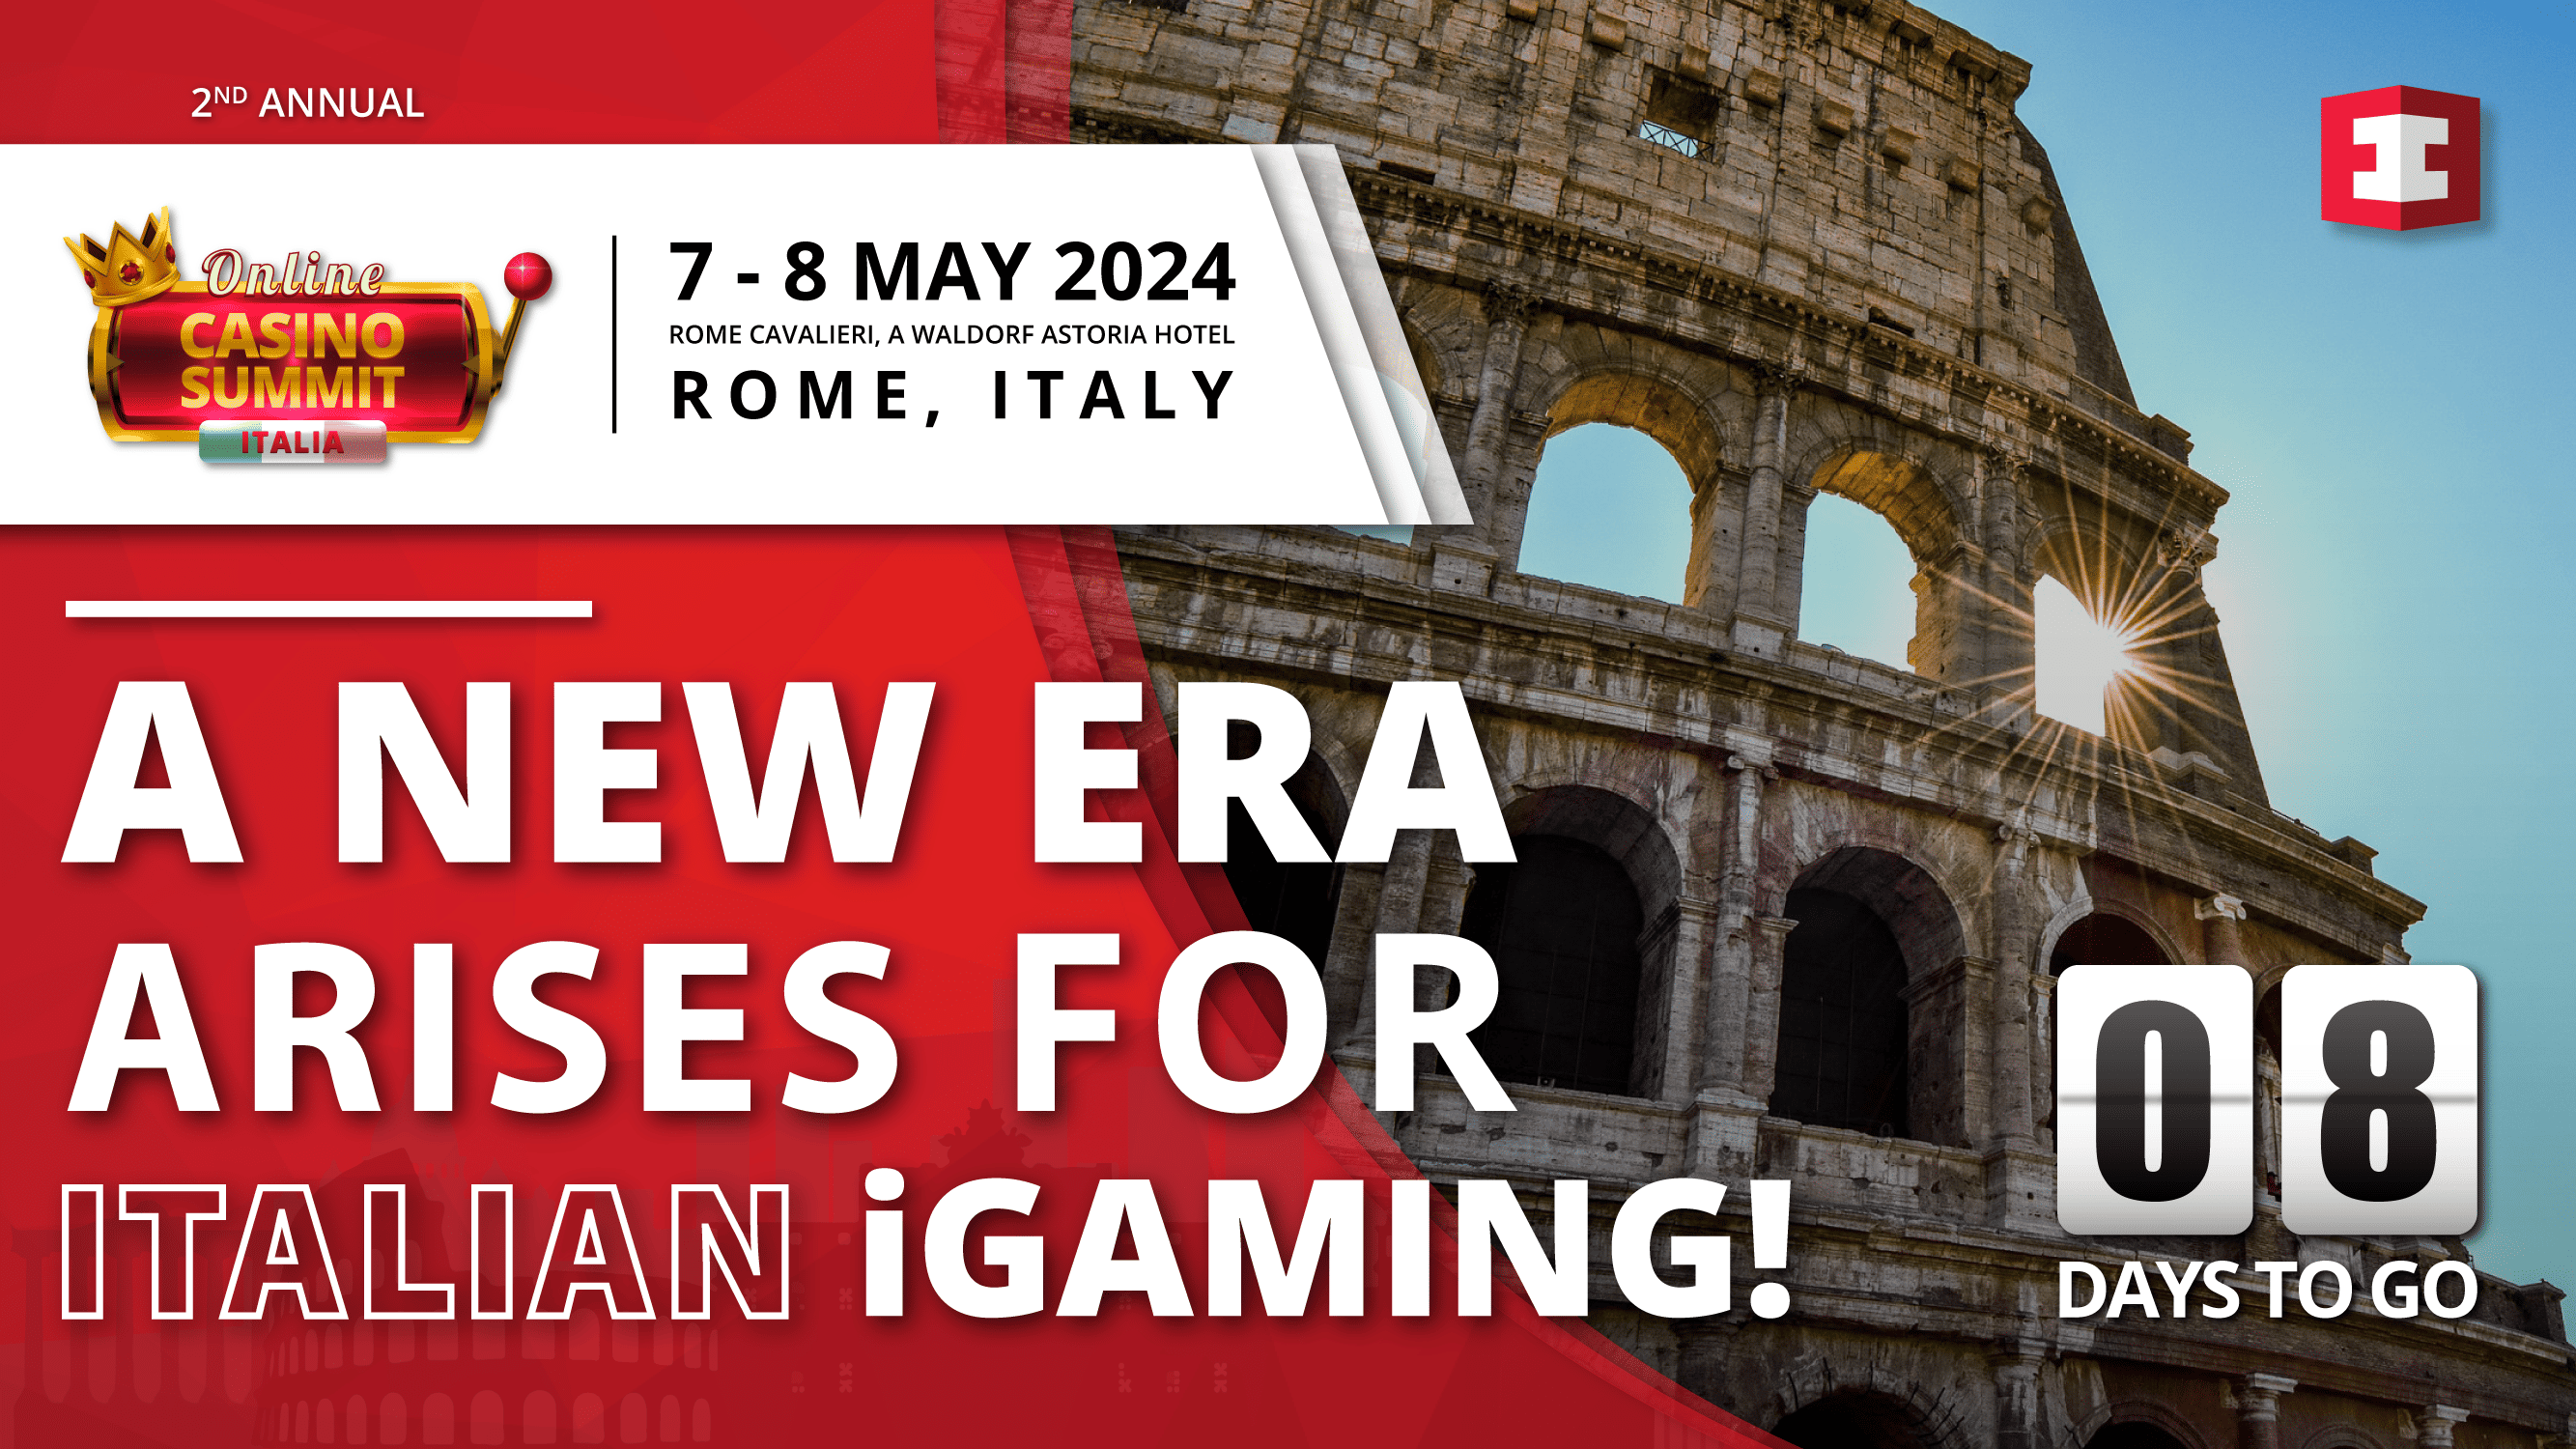 the 2nd Annual Online Casino Summit Italia